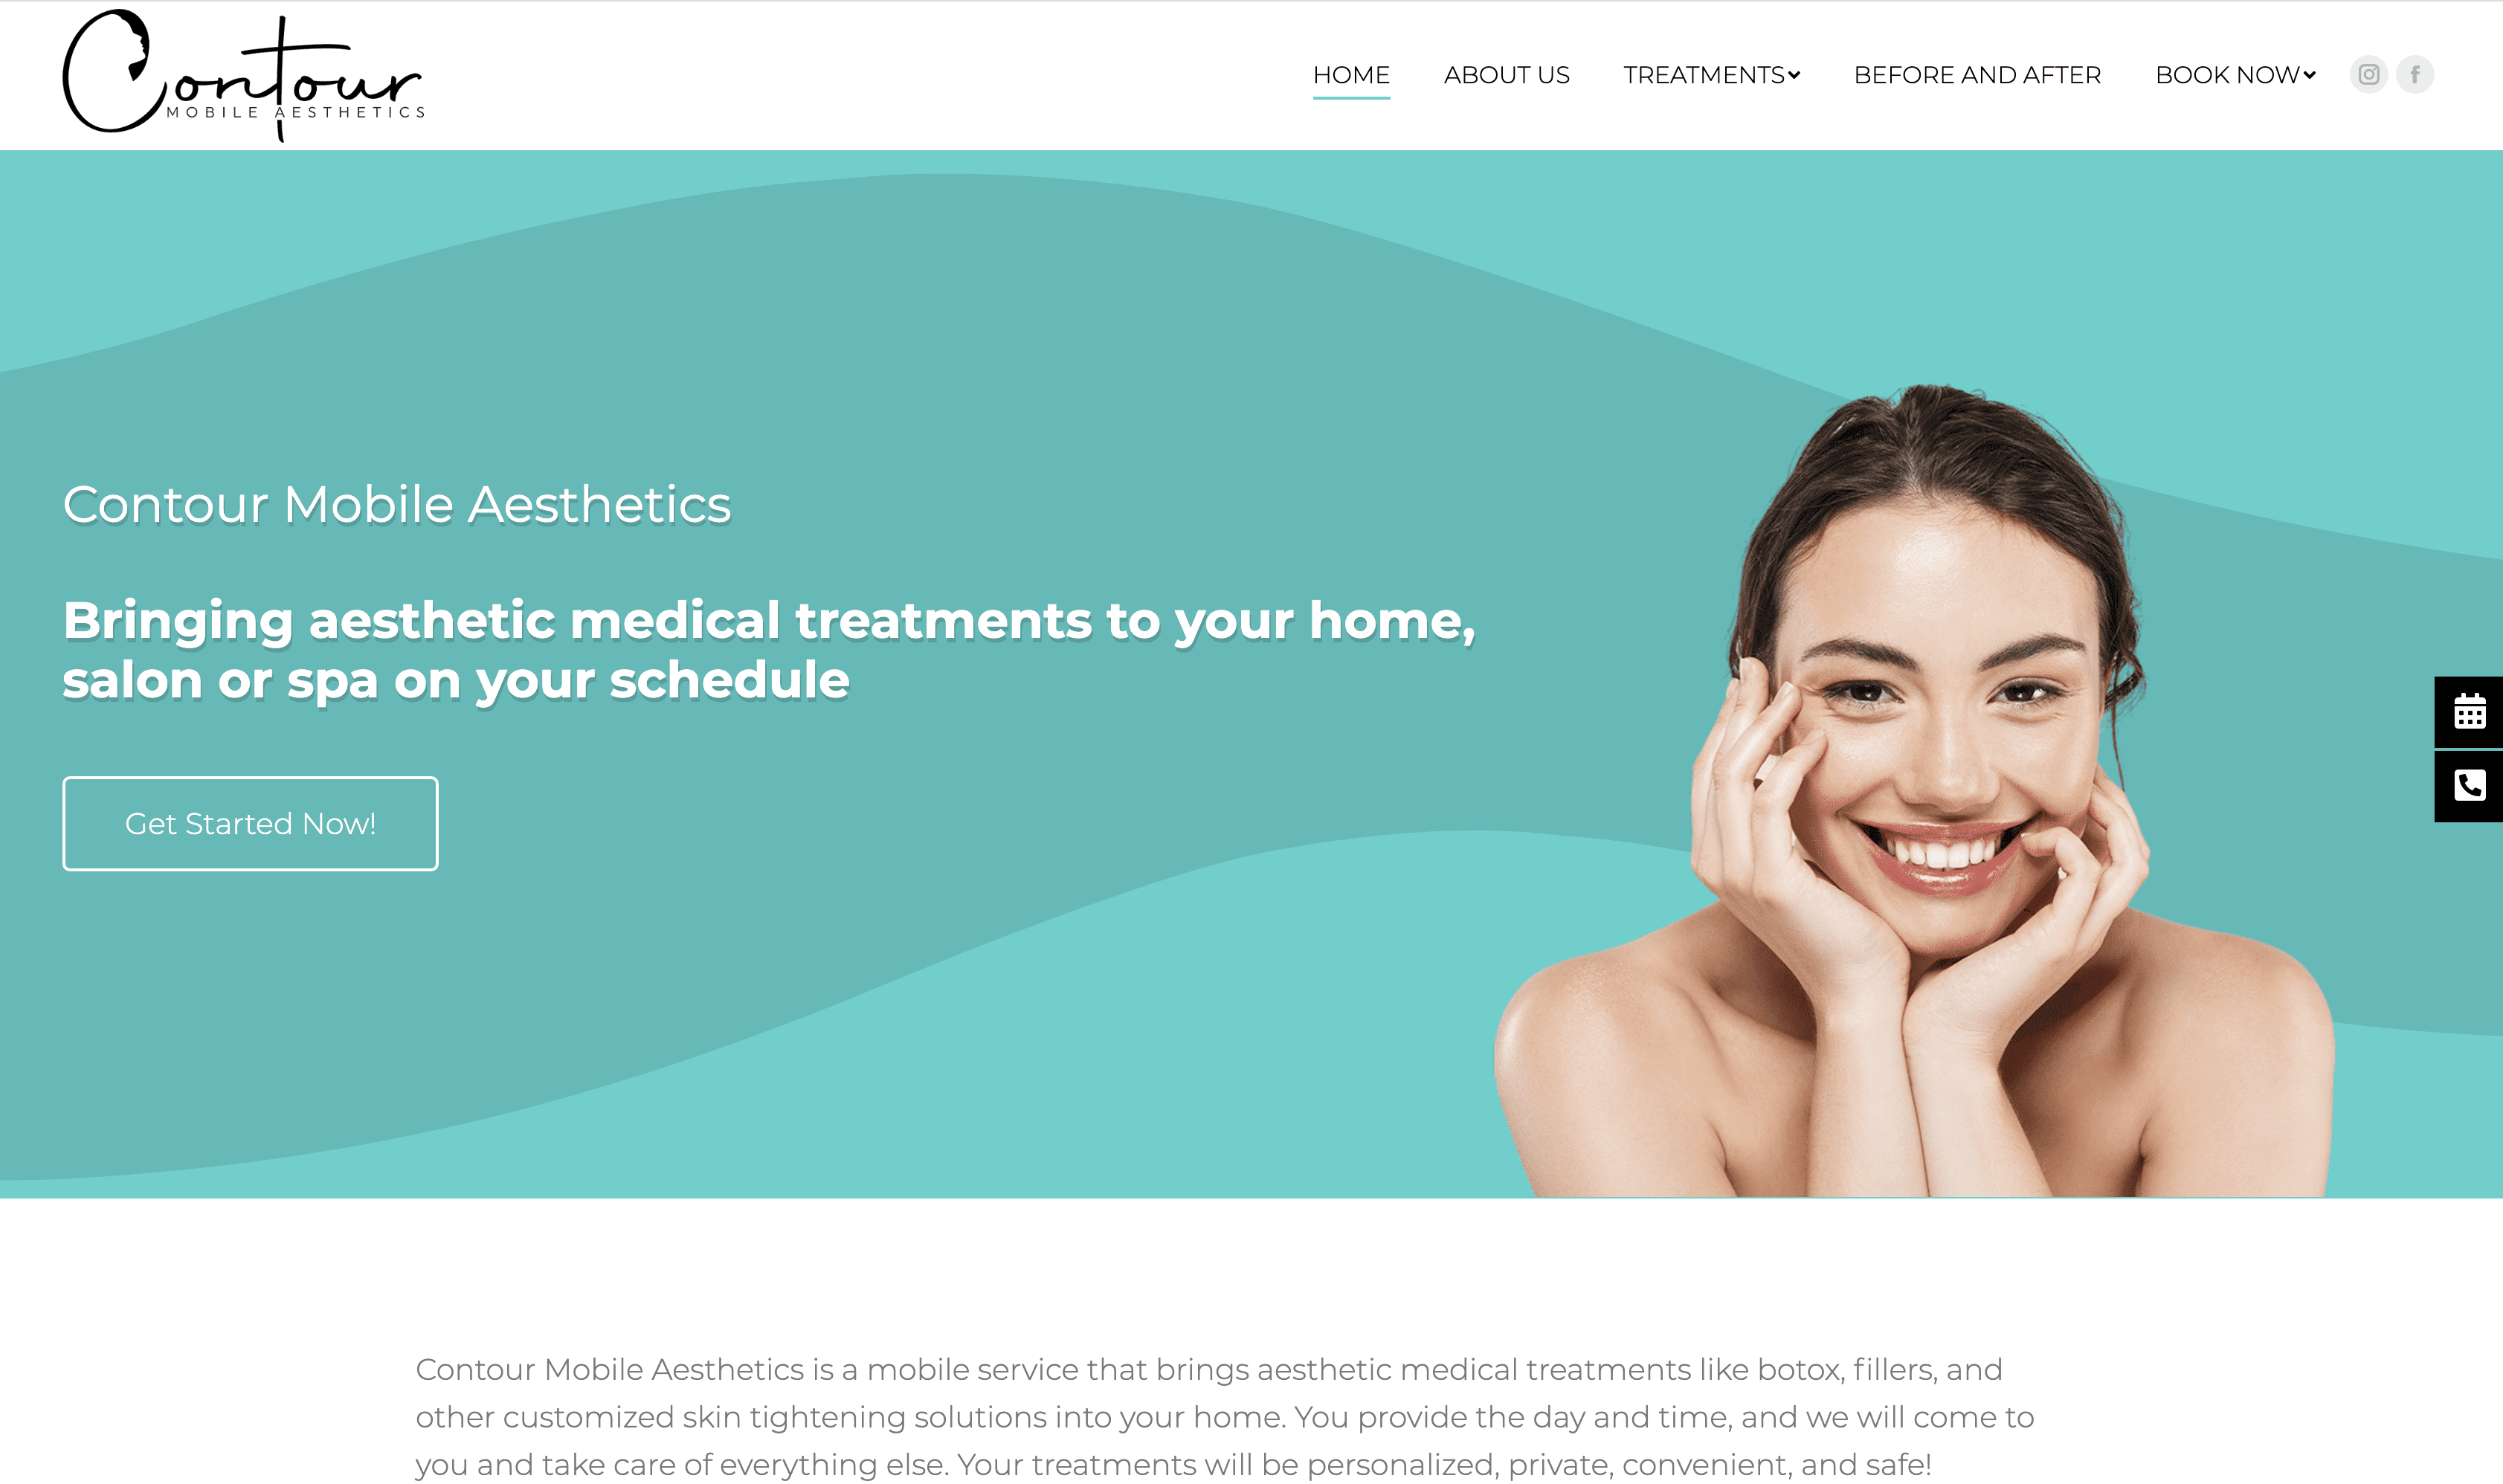 Contour Mobile Aesthetics website design services